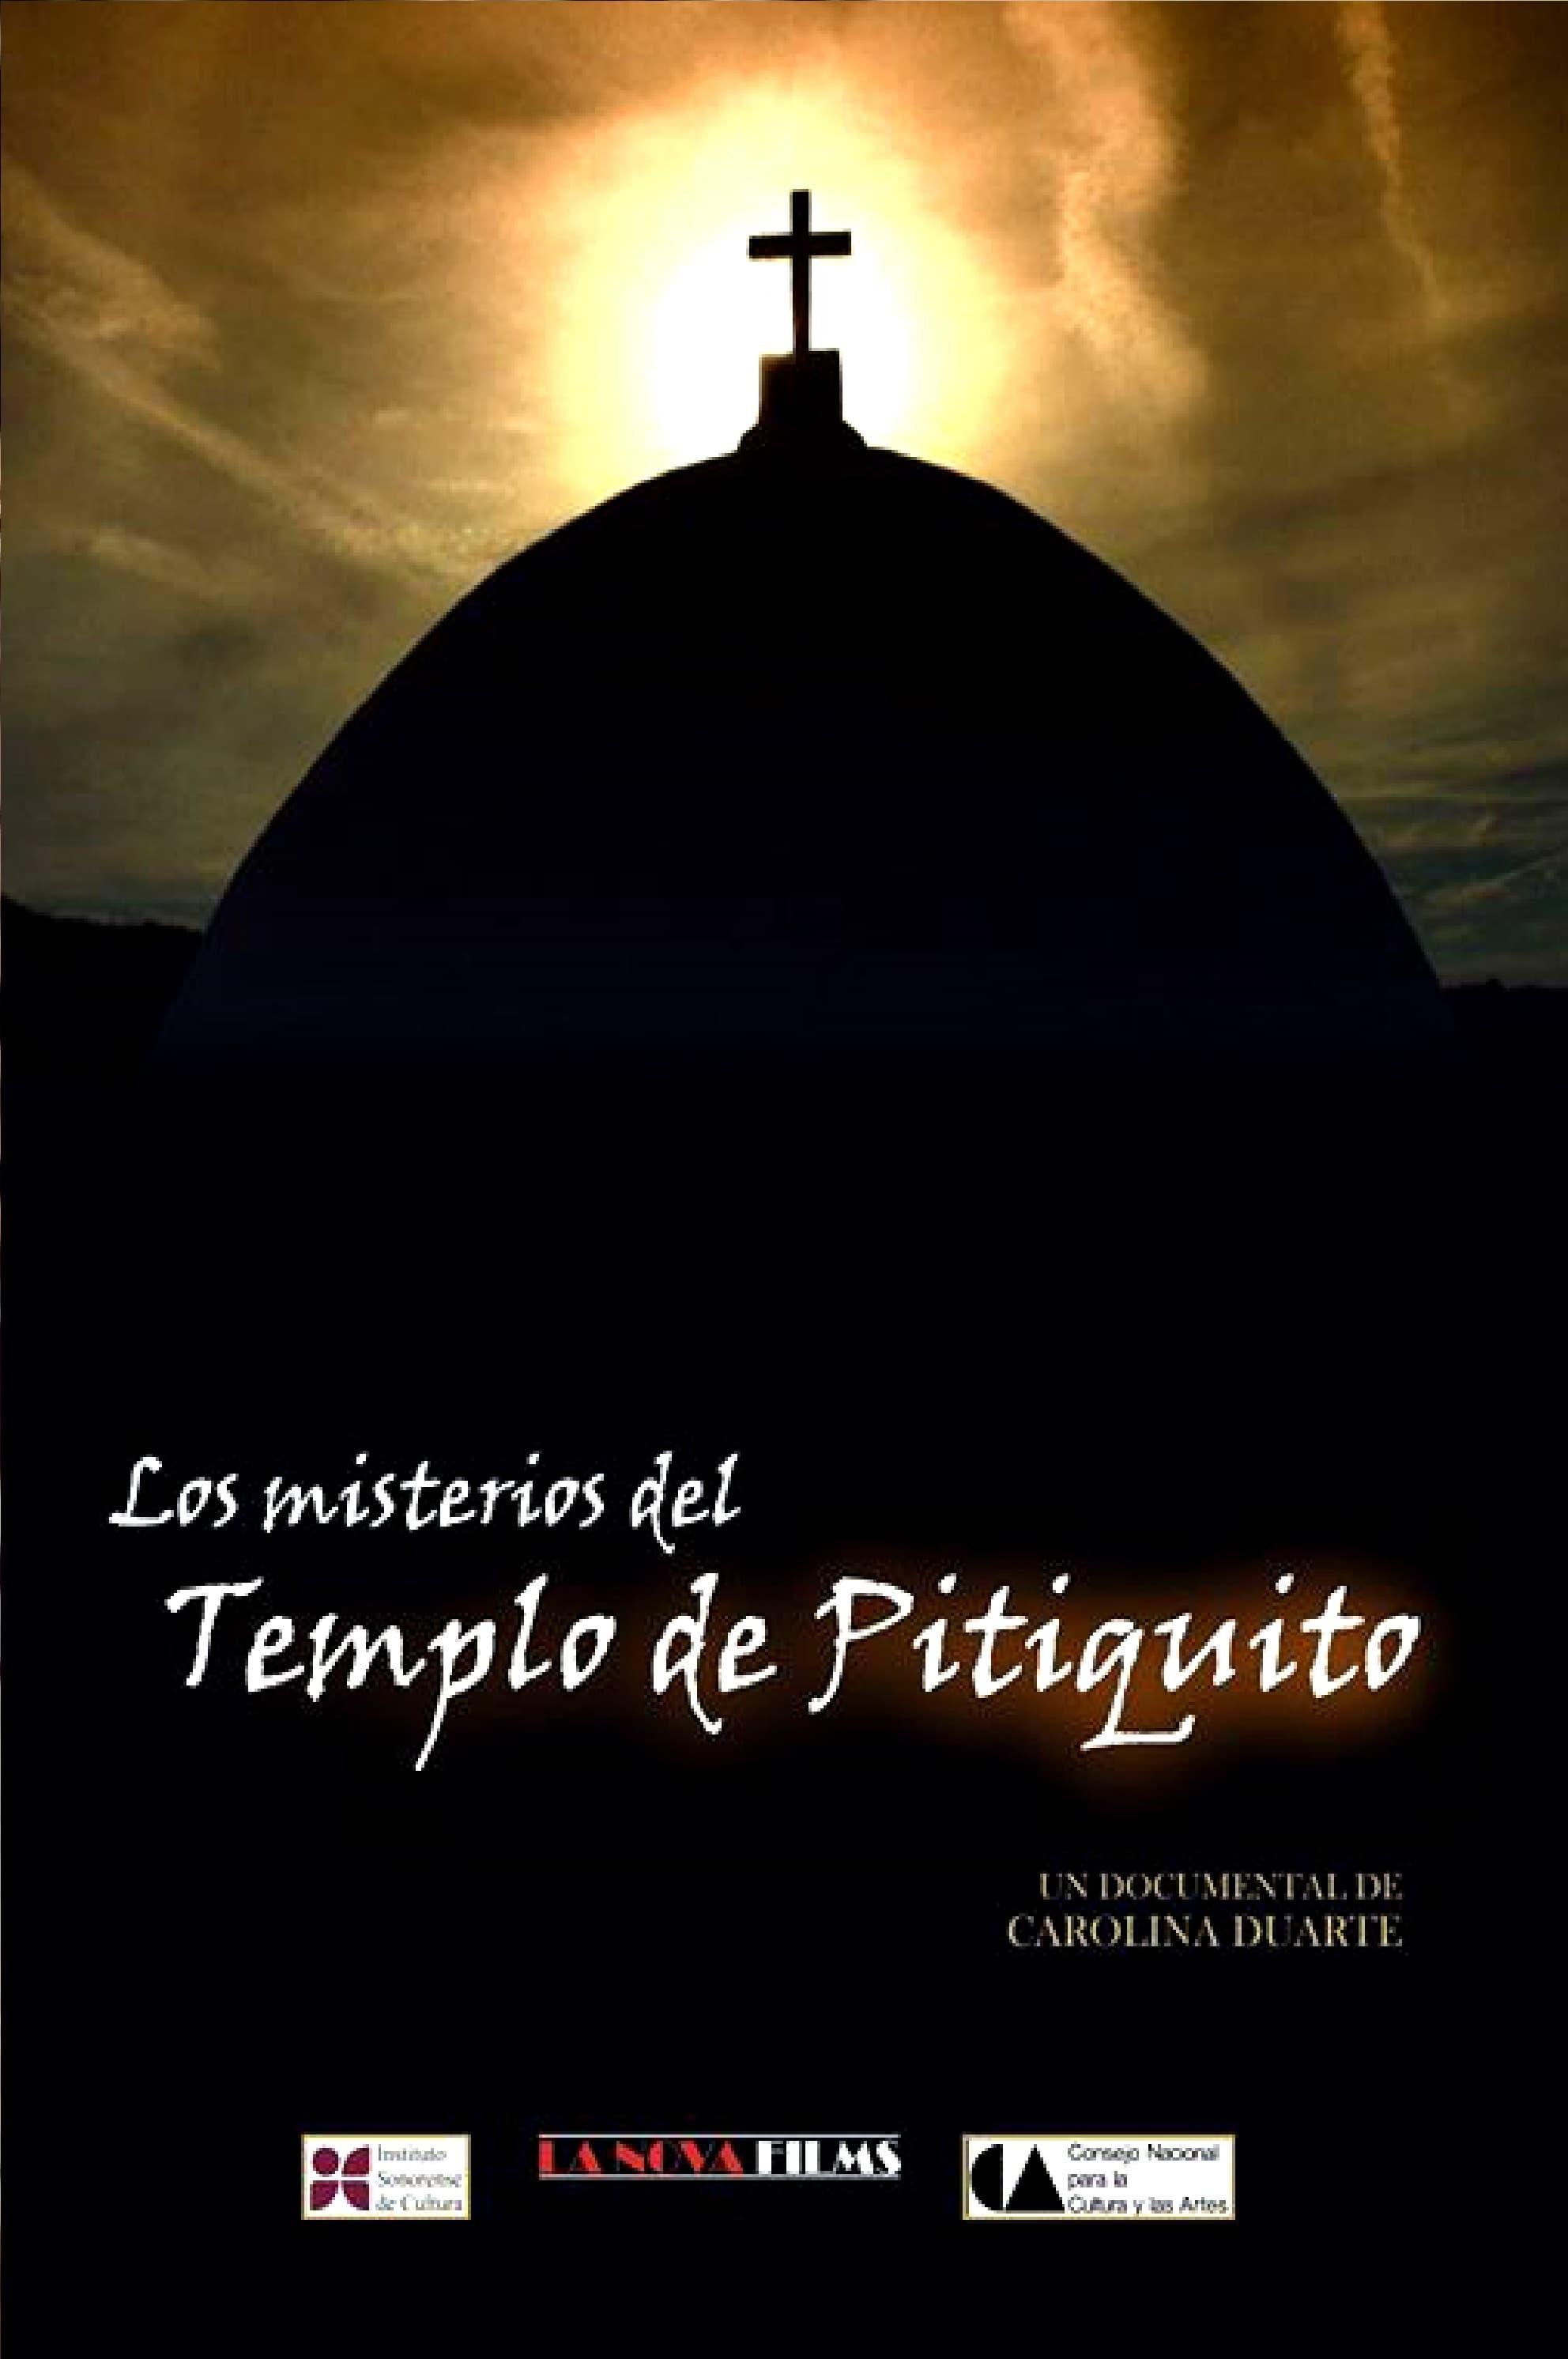 Los Misterios del Templo de Pitiquito poster